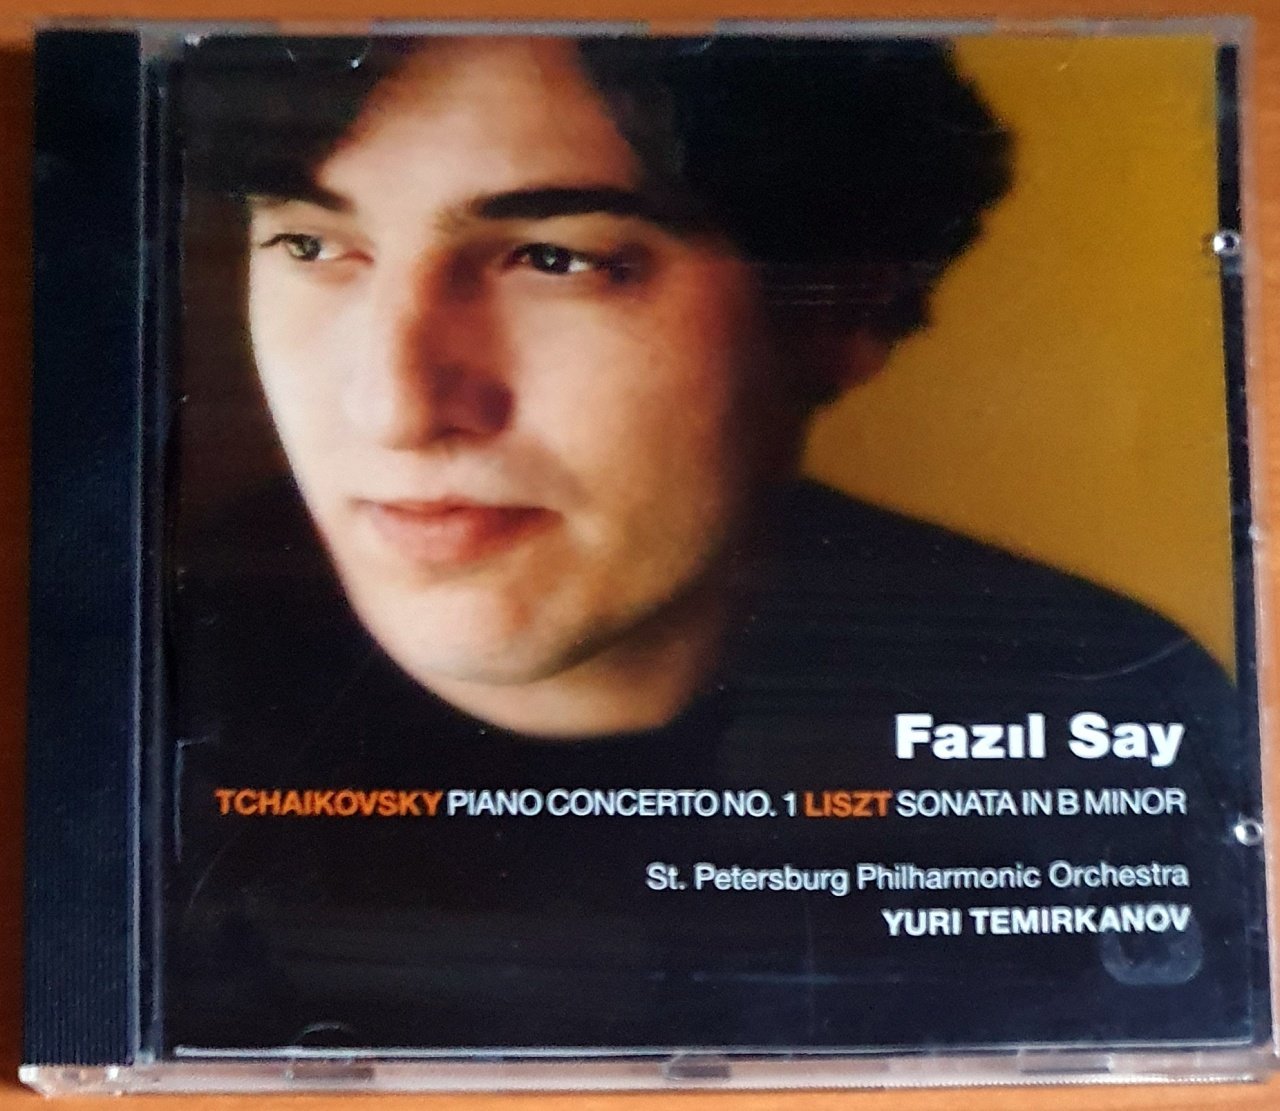 FAZIL SAY / TCHAIKOVSKY PIANO CONCERTOS NO.1, LISZT SONATA IN B MINOR / ST. PETERSBURG PHILHARMONIC ORCHESTRA, YURI TEMIRKANOV (2001) - CD 2.EL